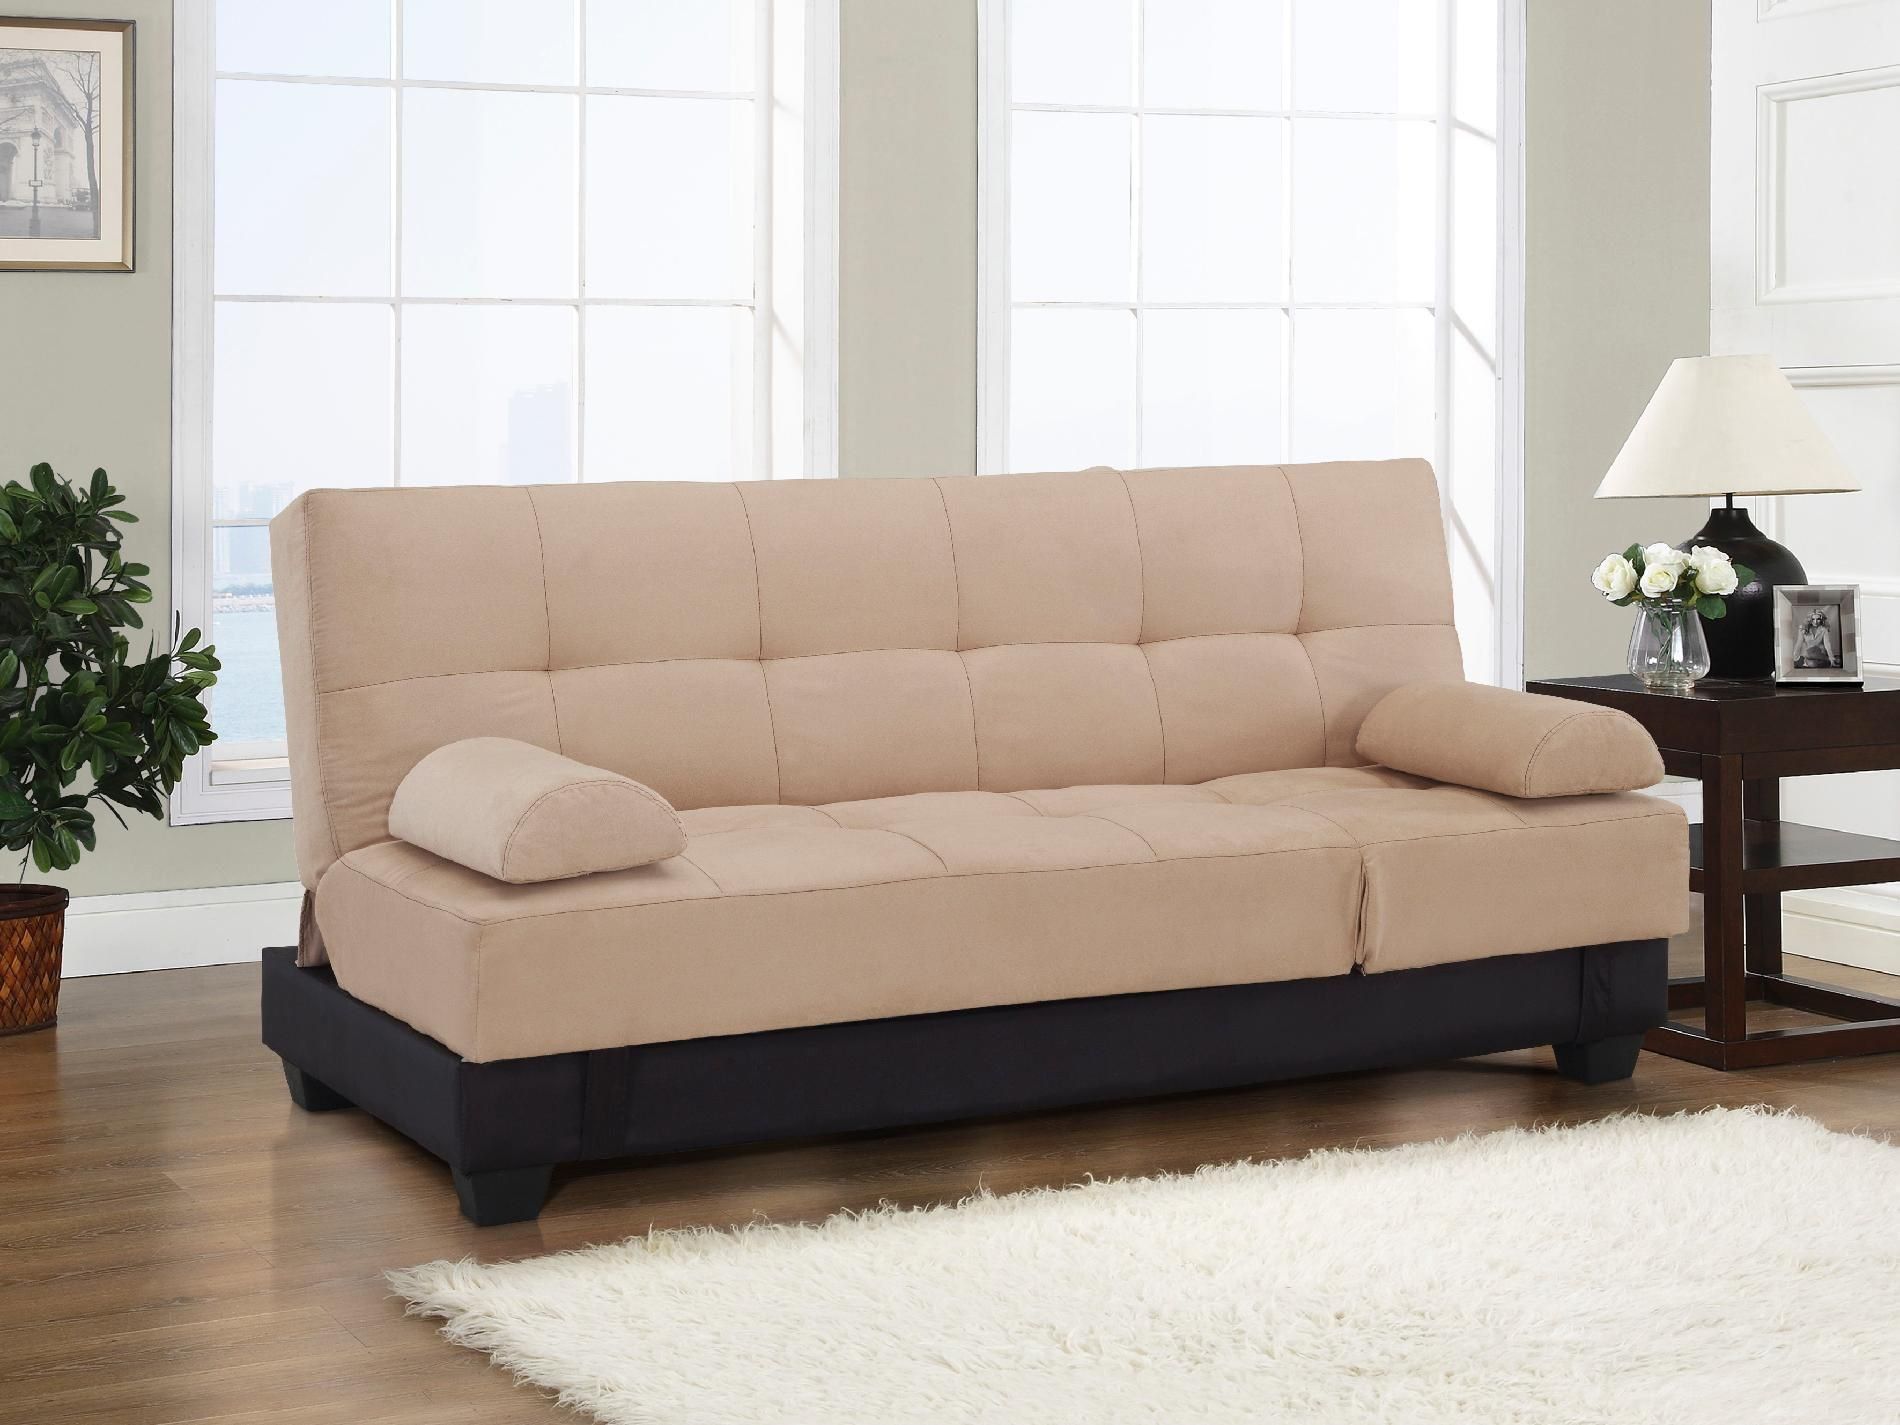 serta matrix convertible leather sleeper sofa java